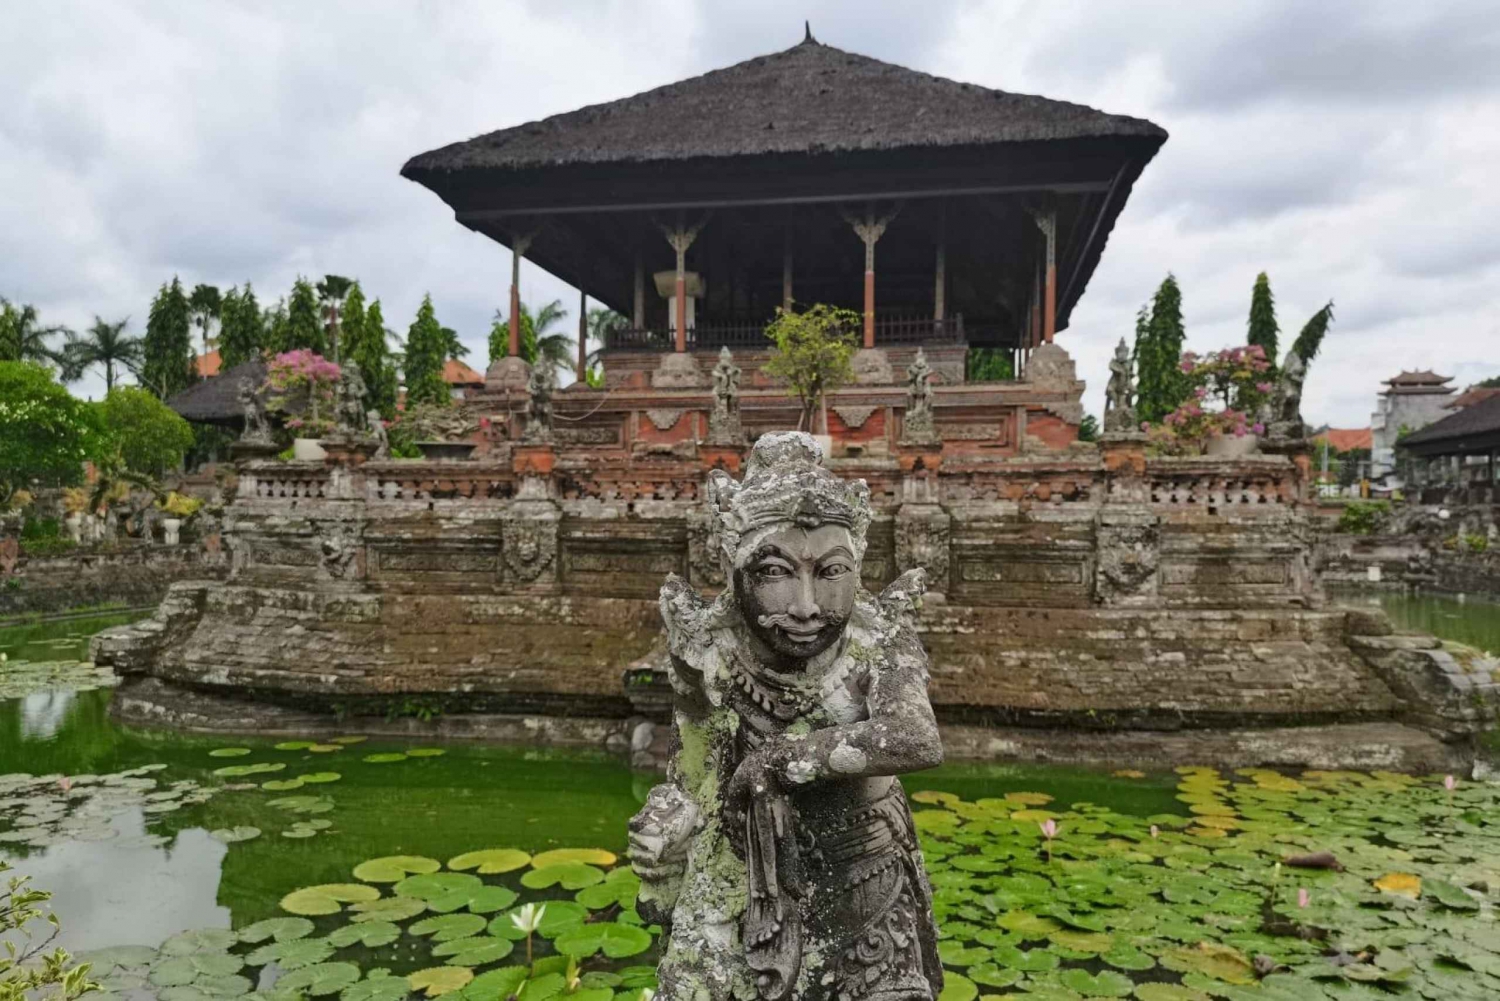 Bali: Penglipuran Village combined Sacred Bali Temple Tour